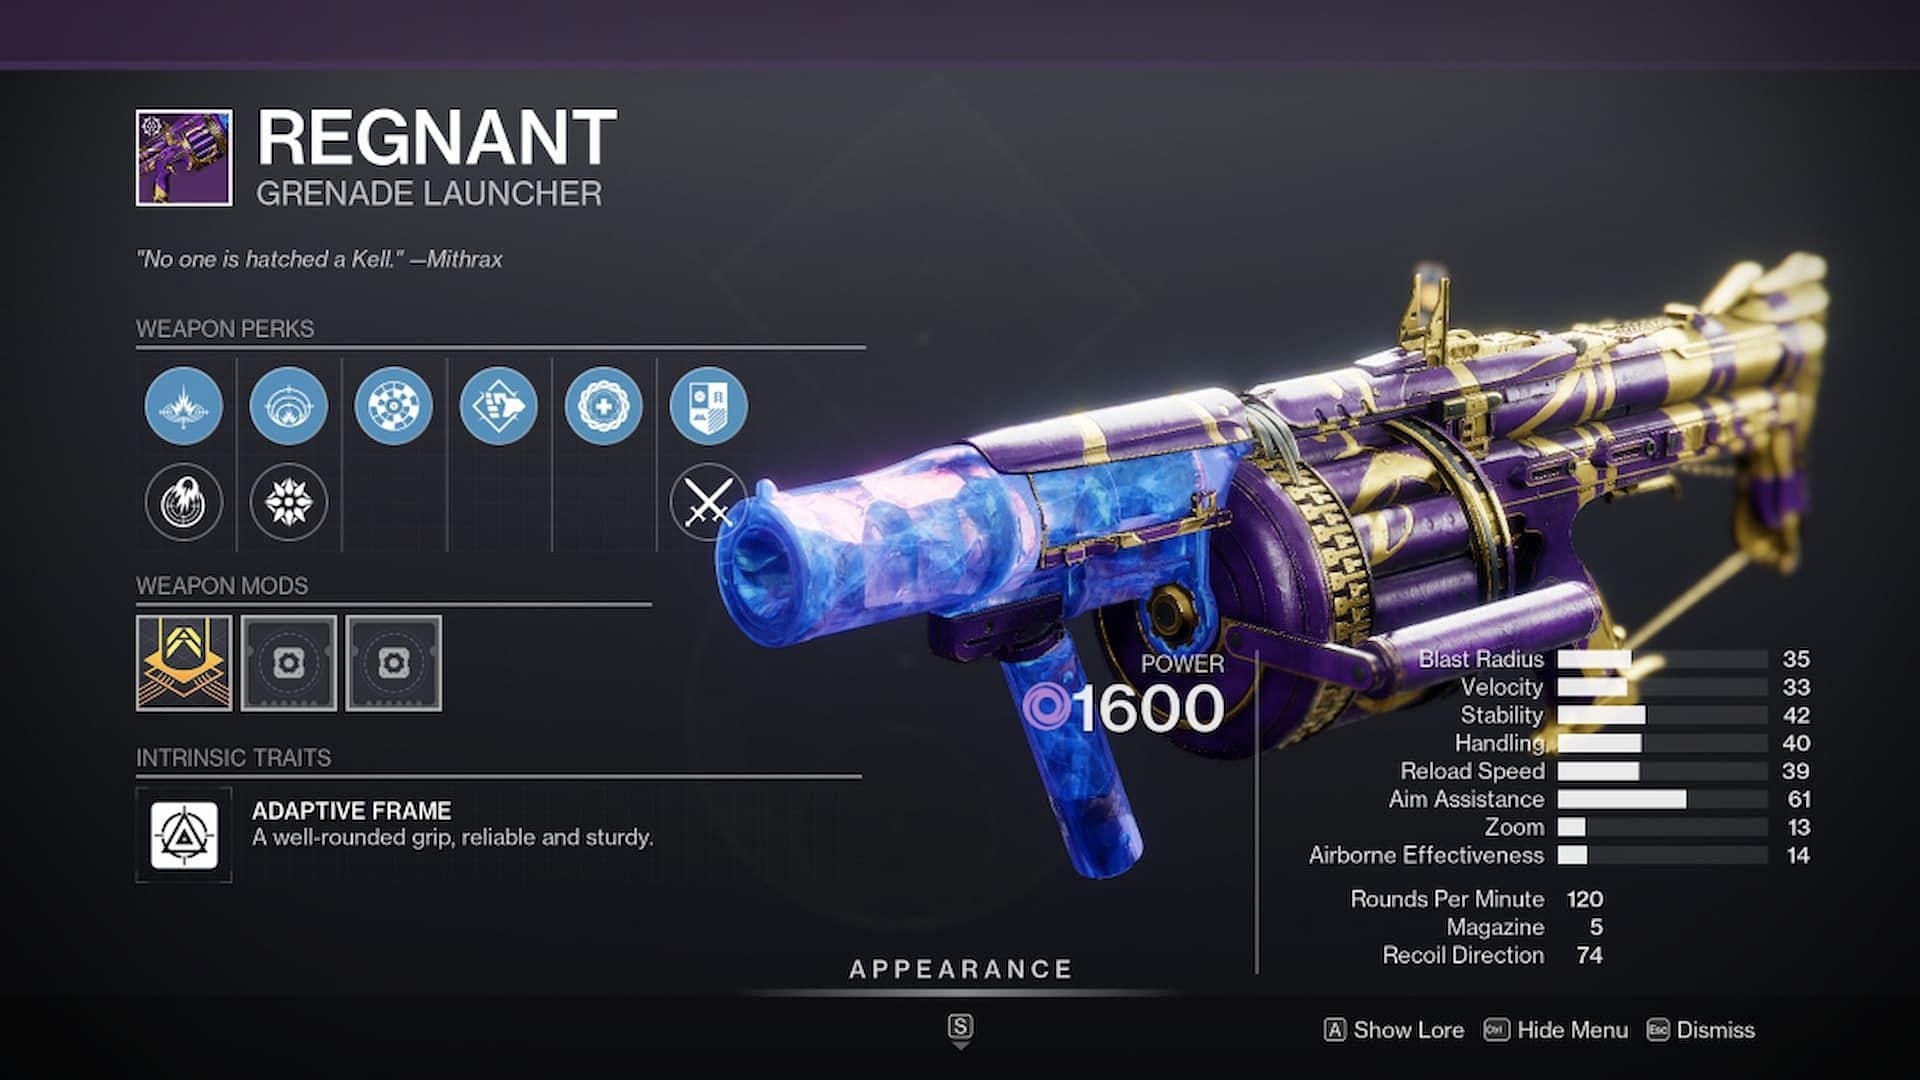 Regnant is a weapon similar to Wendigo GL3 (Image via Bungie)